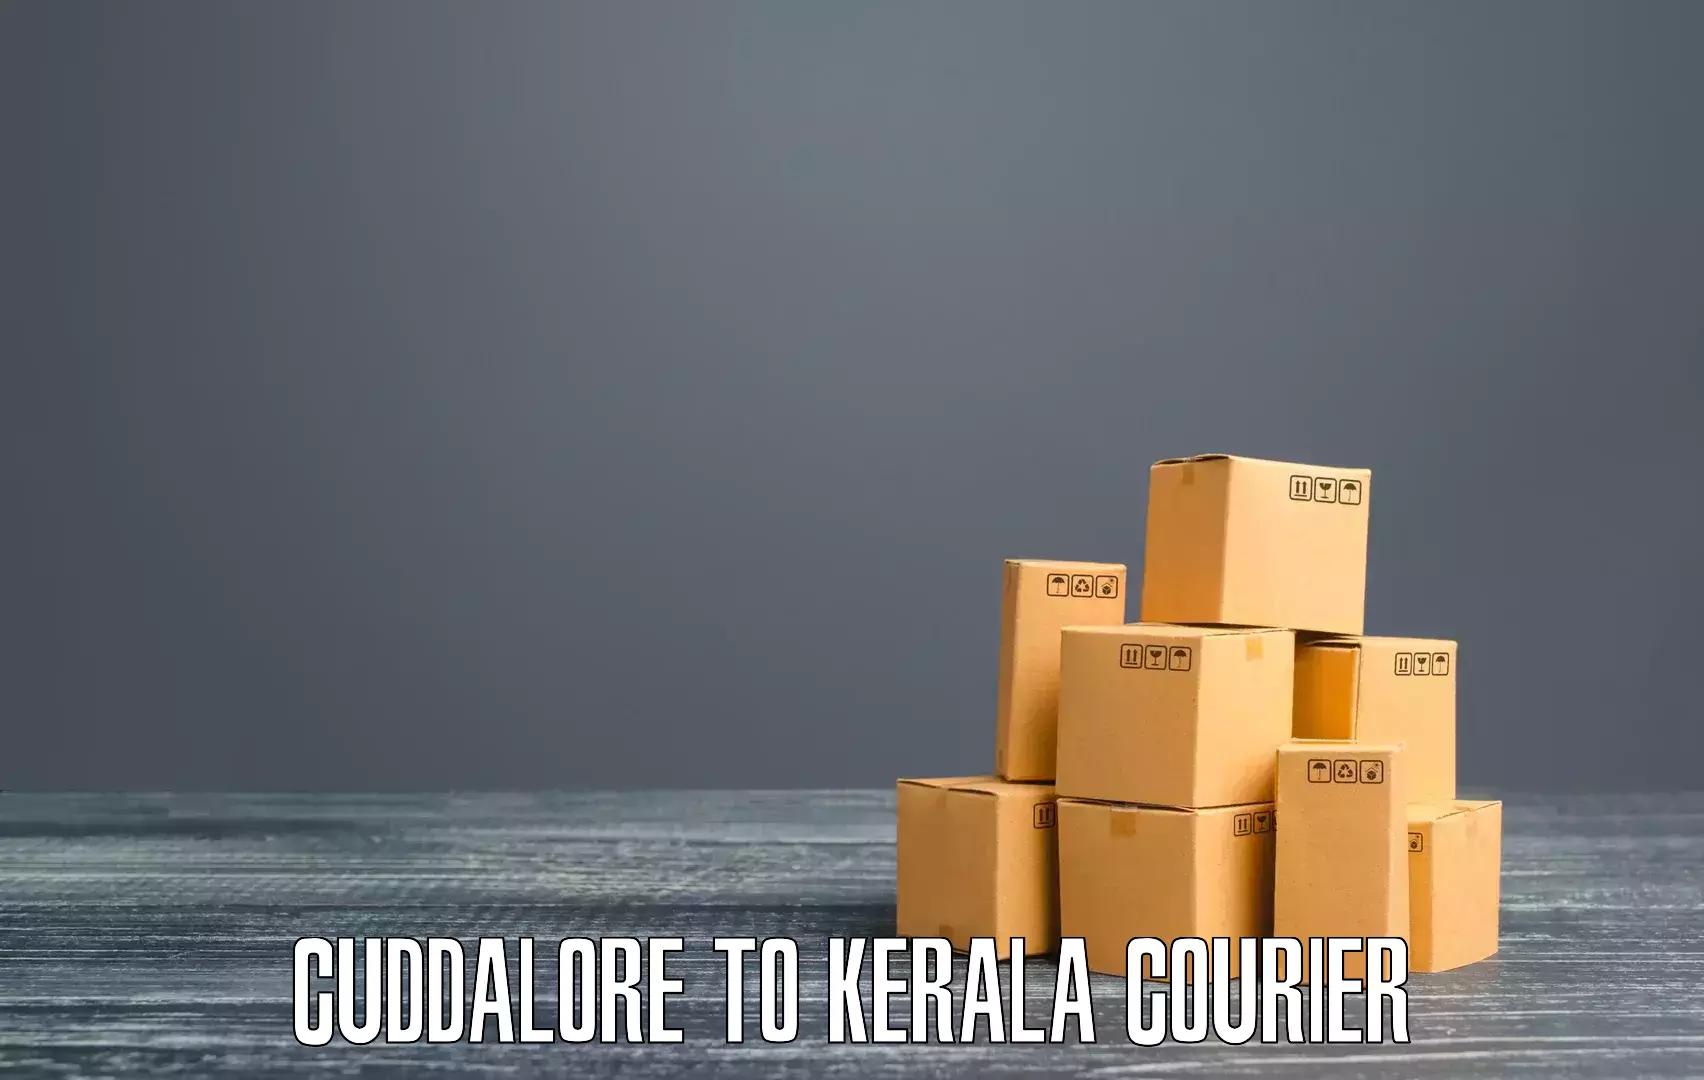 Automated shipping processes Cuddalore to Kerala